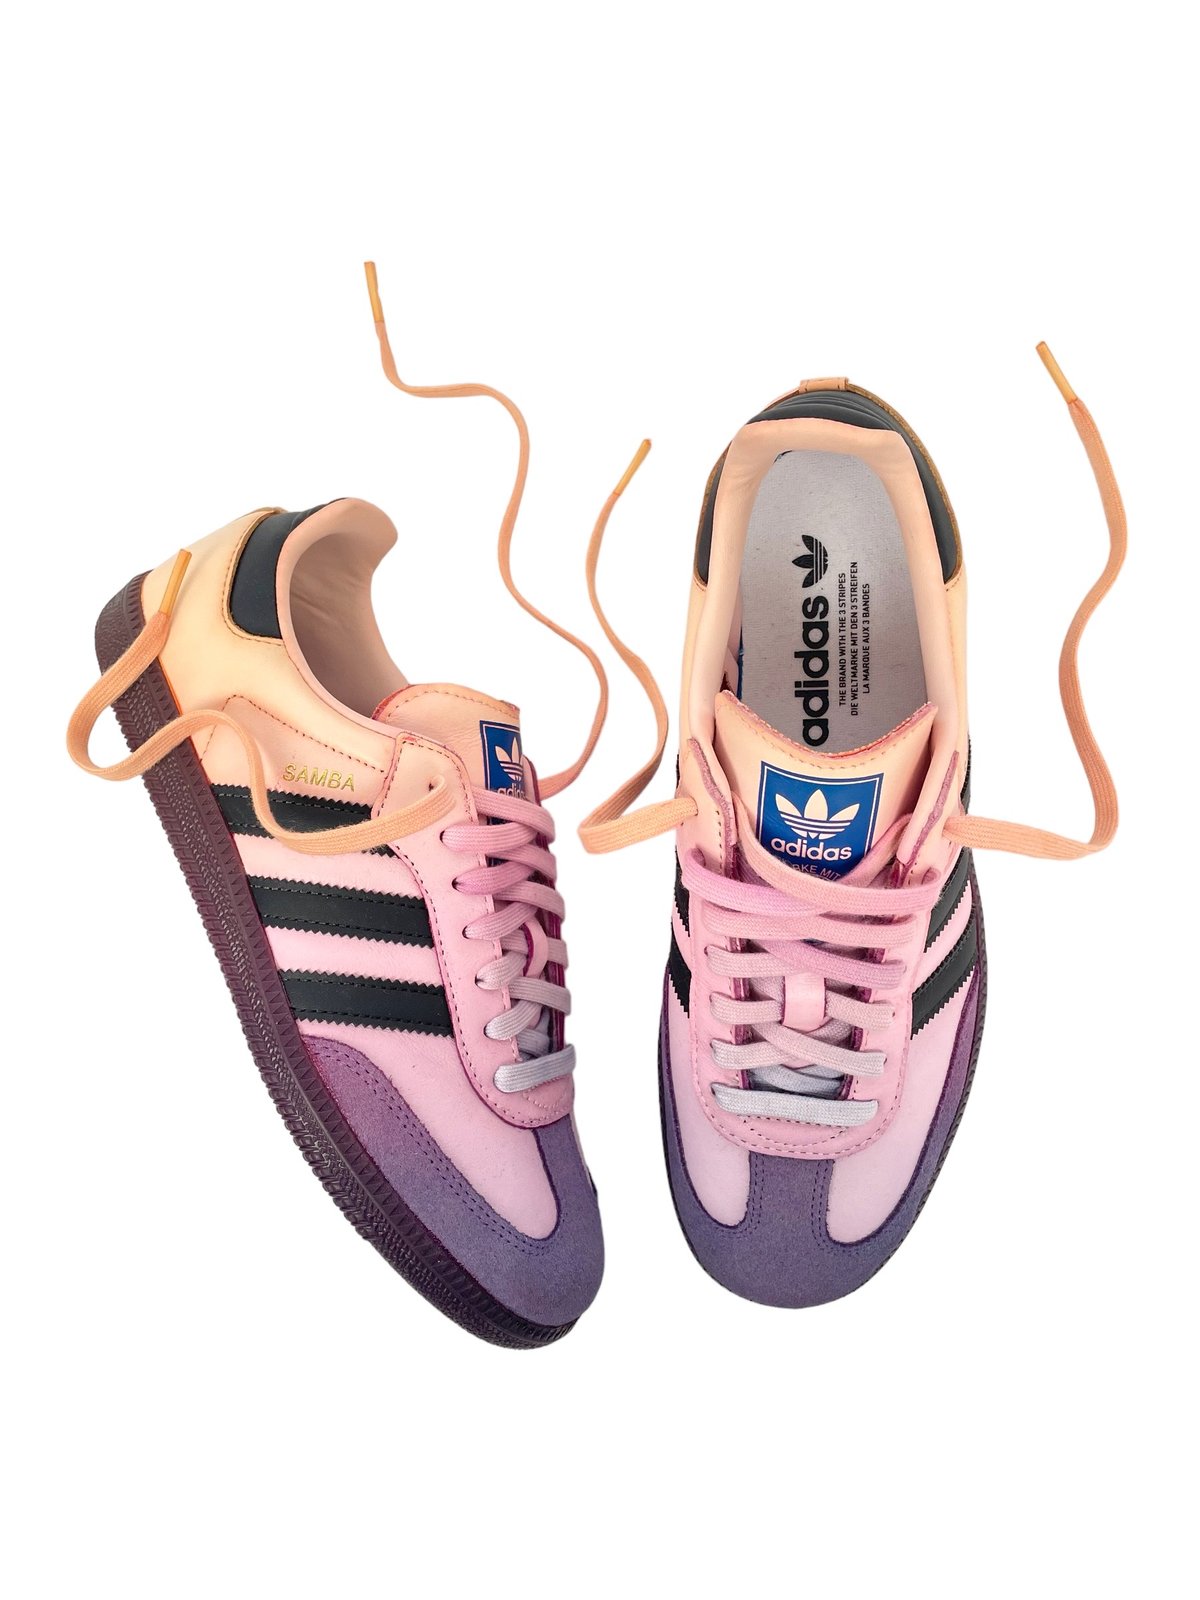 Adidas samba  Samba shoes, Sneakers, Shoes